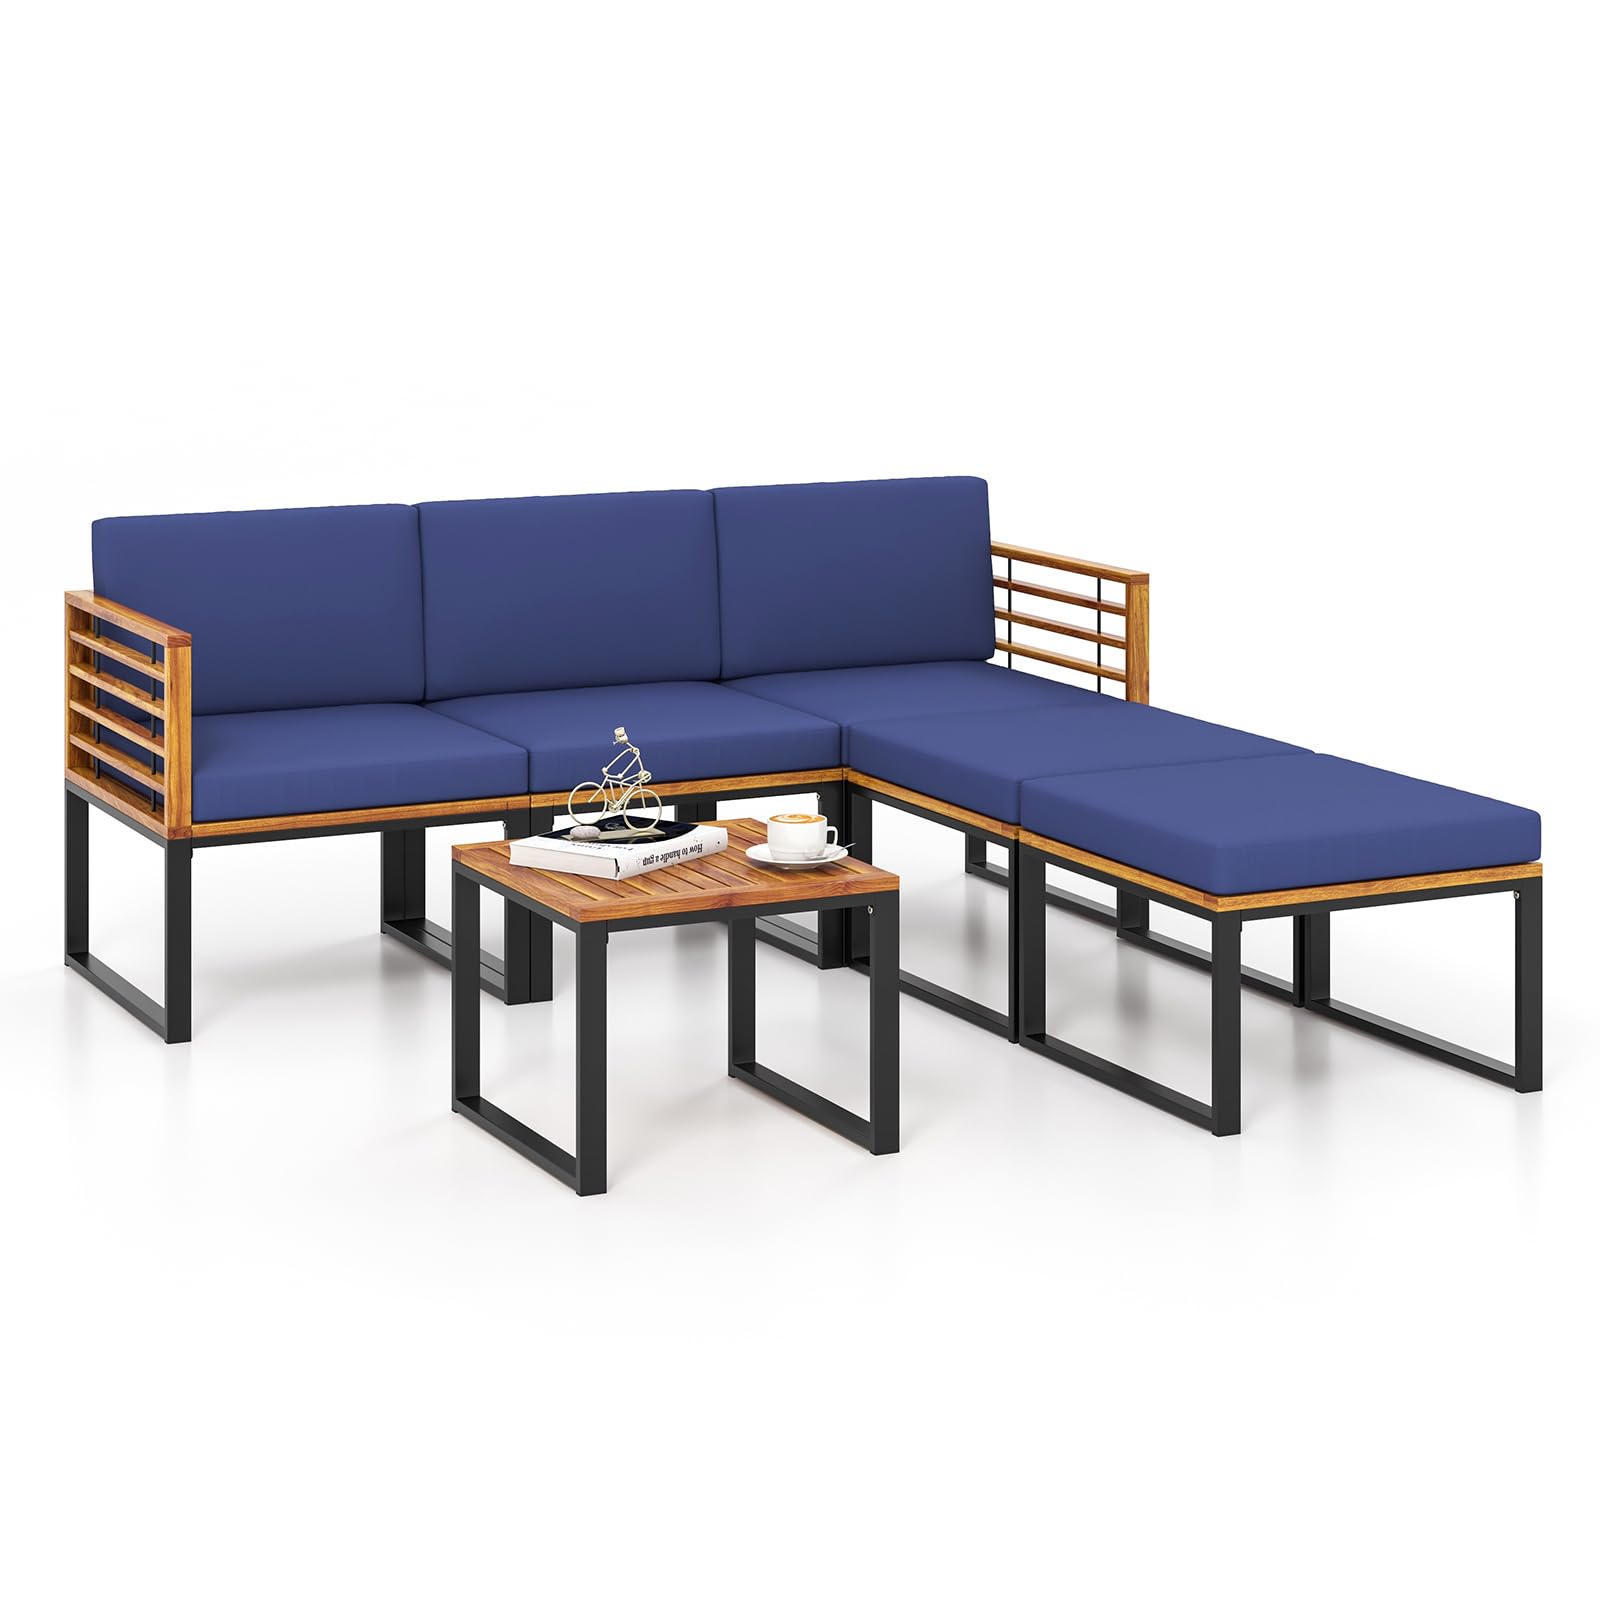 Tangkula 6 Piece Patio Conversation Sofa Set, Acacia Wood Chair Set with Ottomans & Coffee Table